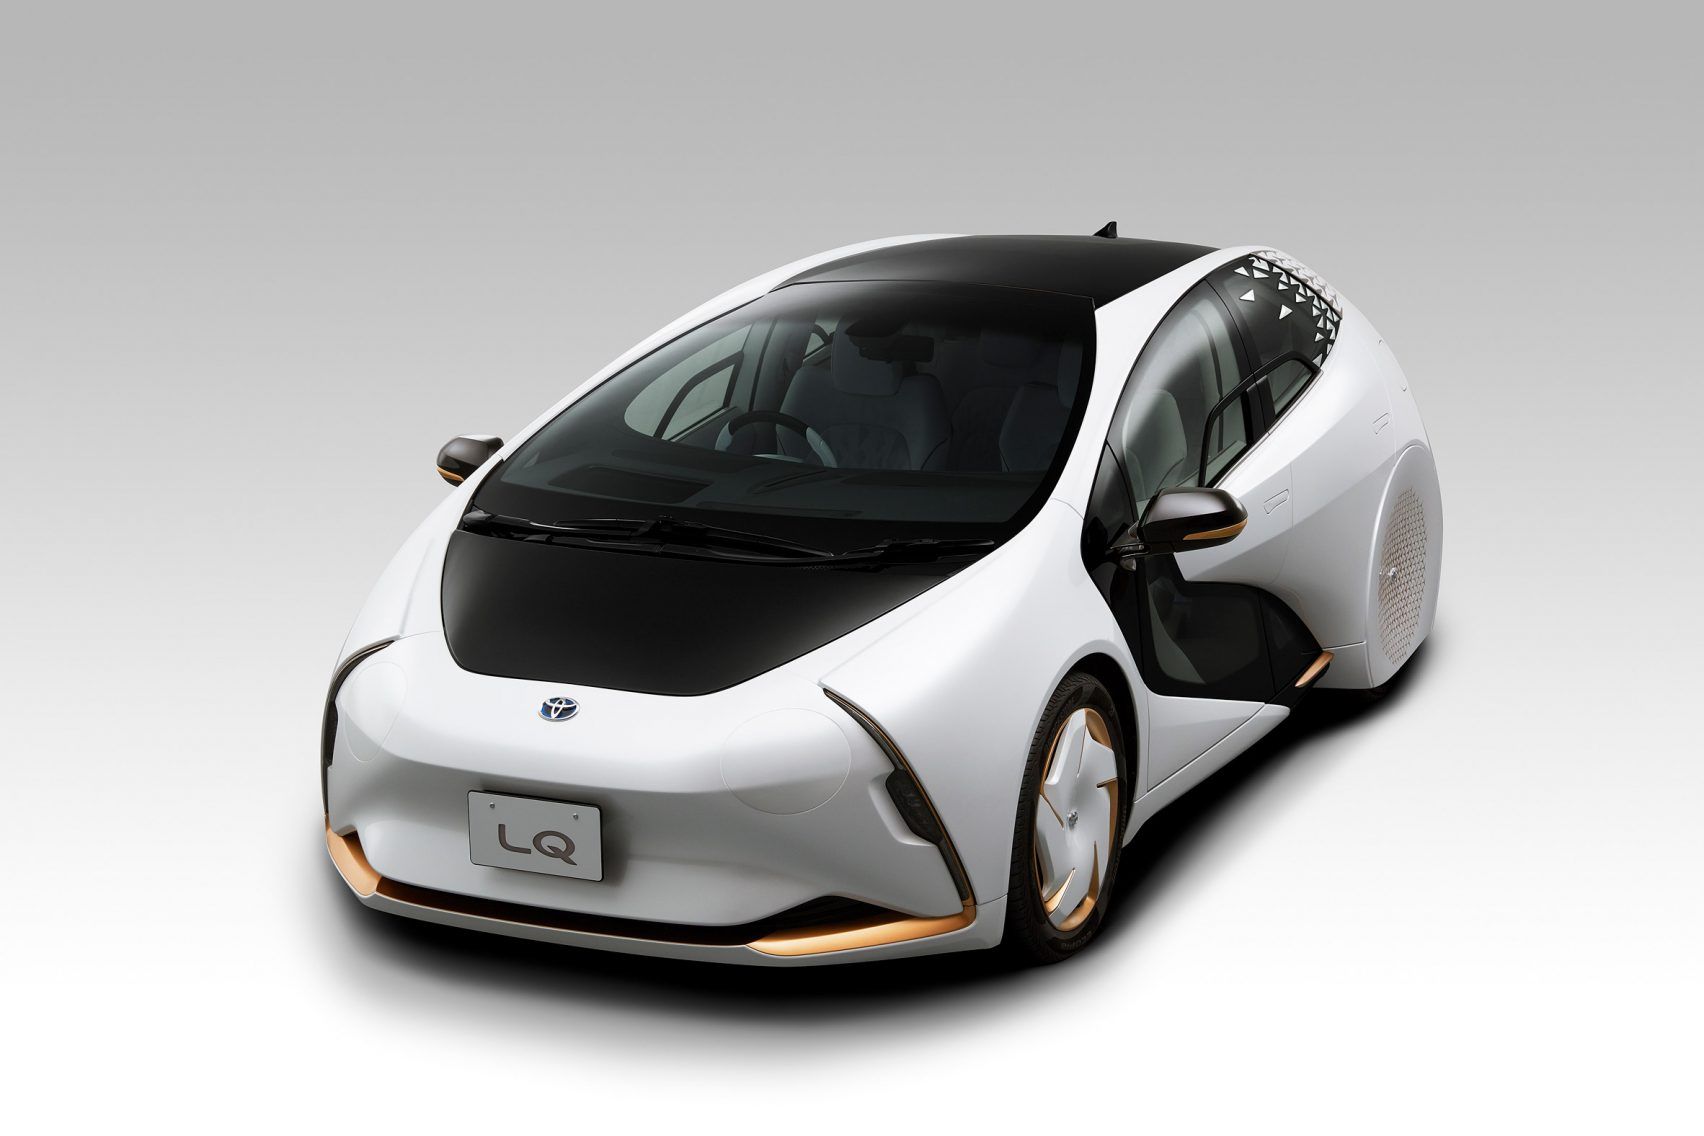 Toyota’s LQ concept creates a “Ƅond” Ƅetween car and driʋer with AI agent